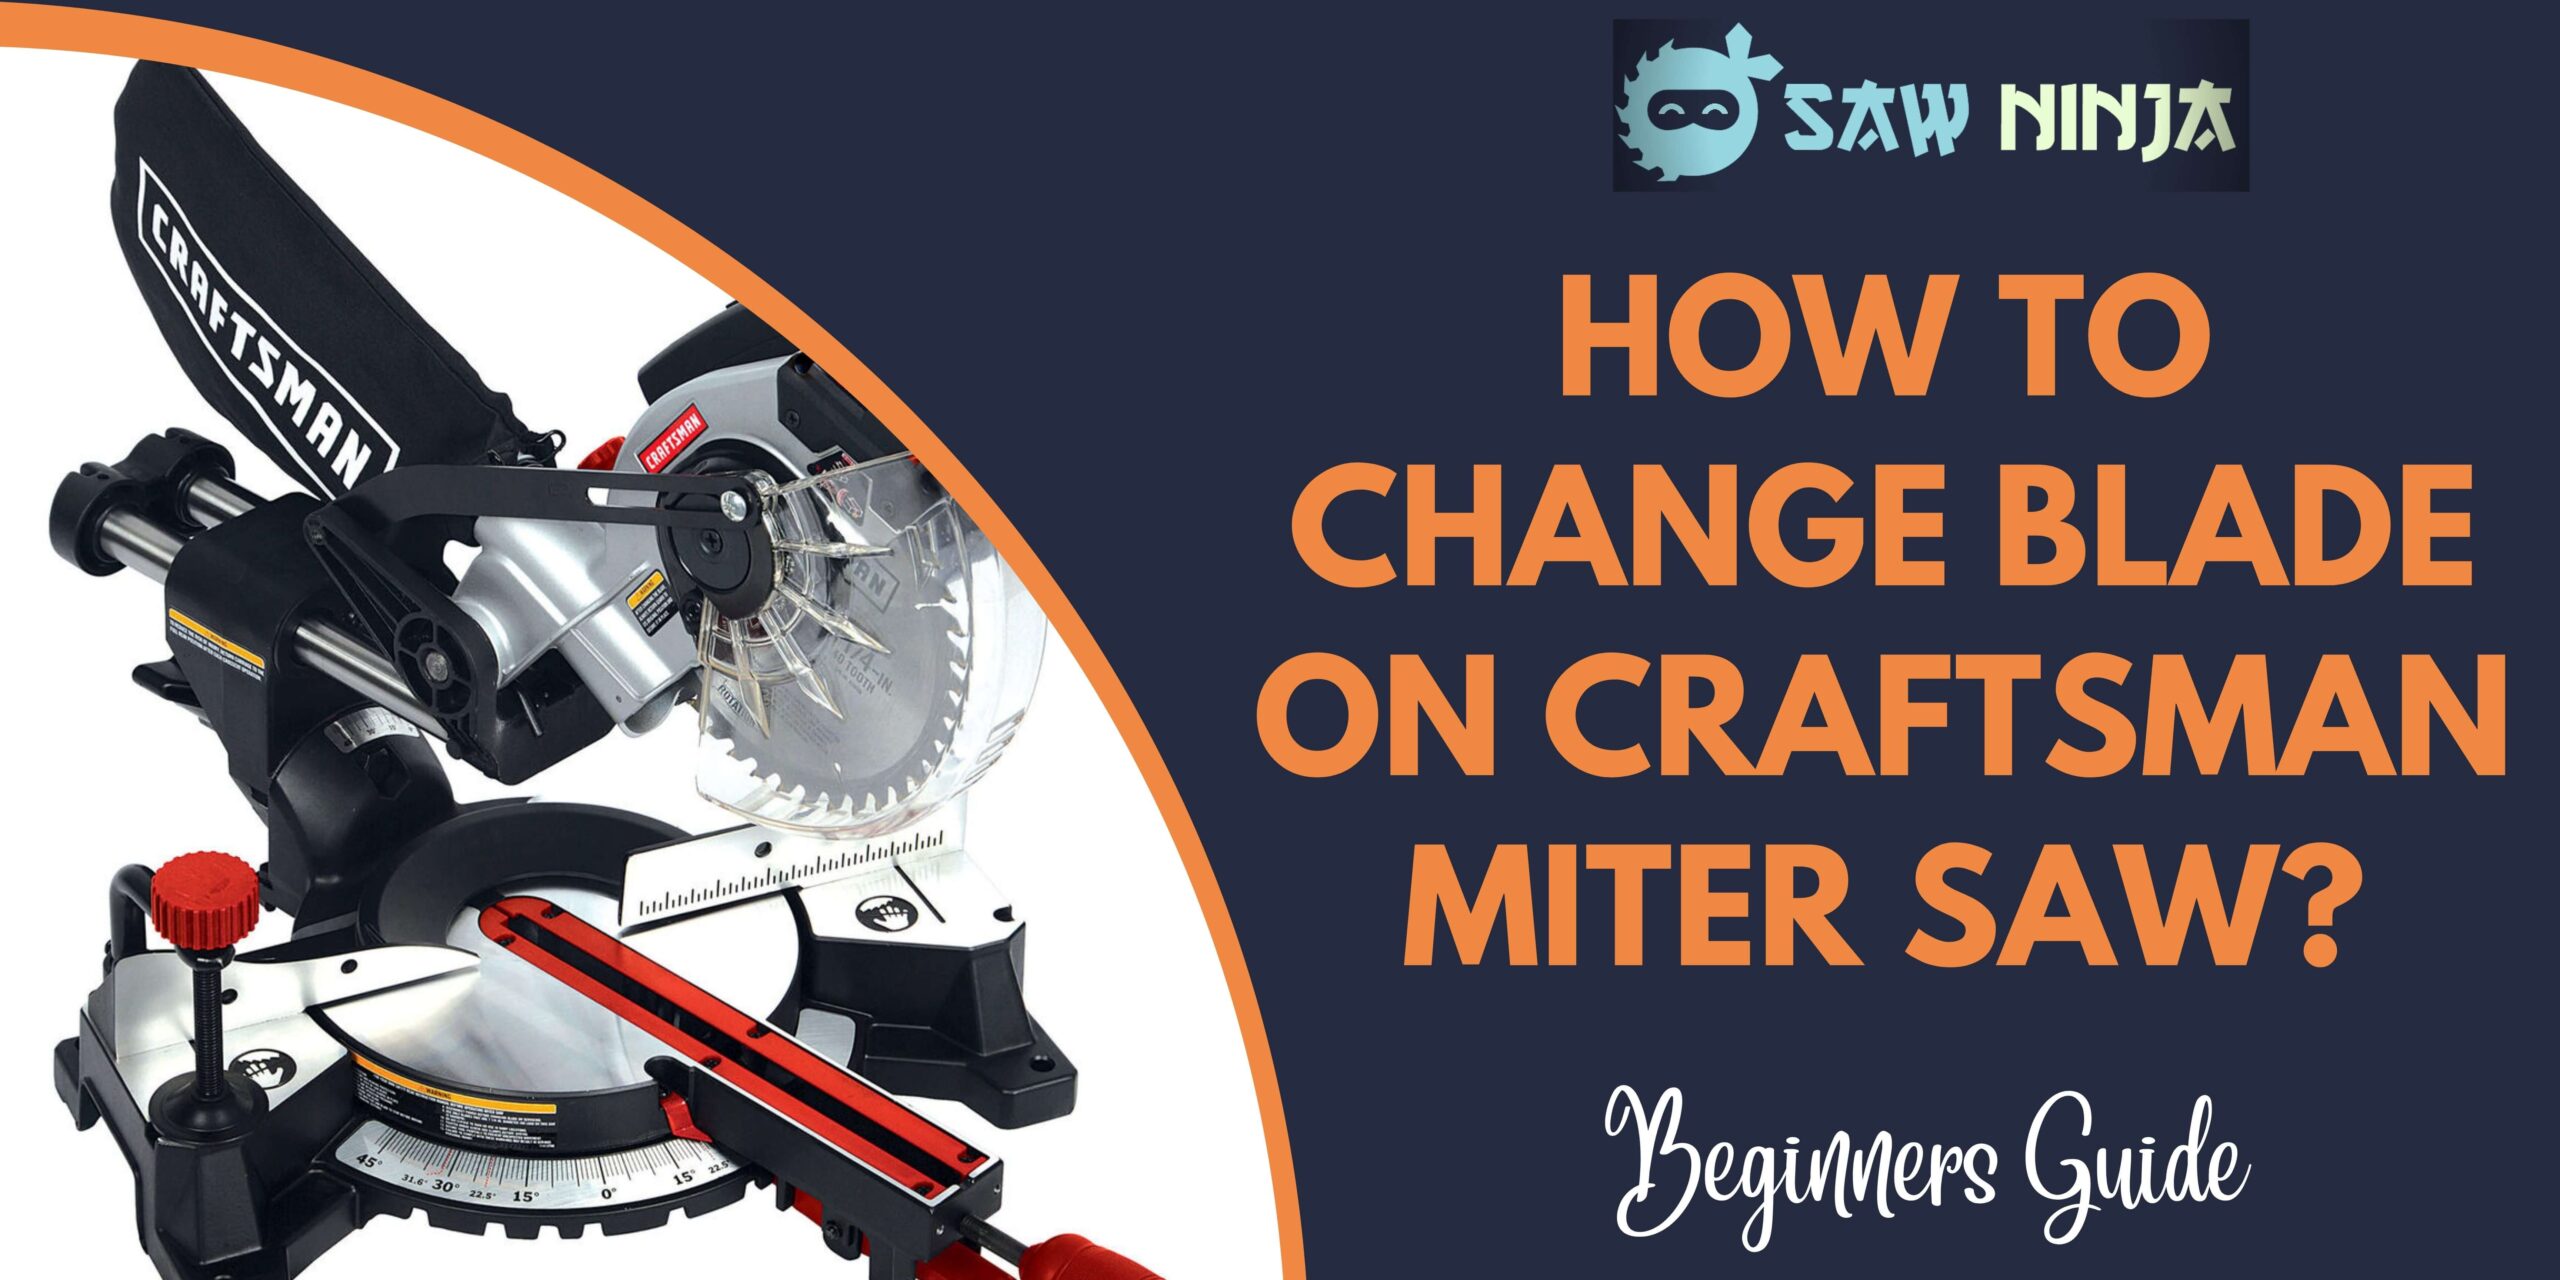 How To Change Blade on Craftsman Miter Saw